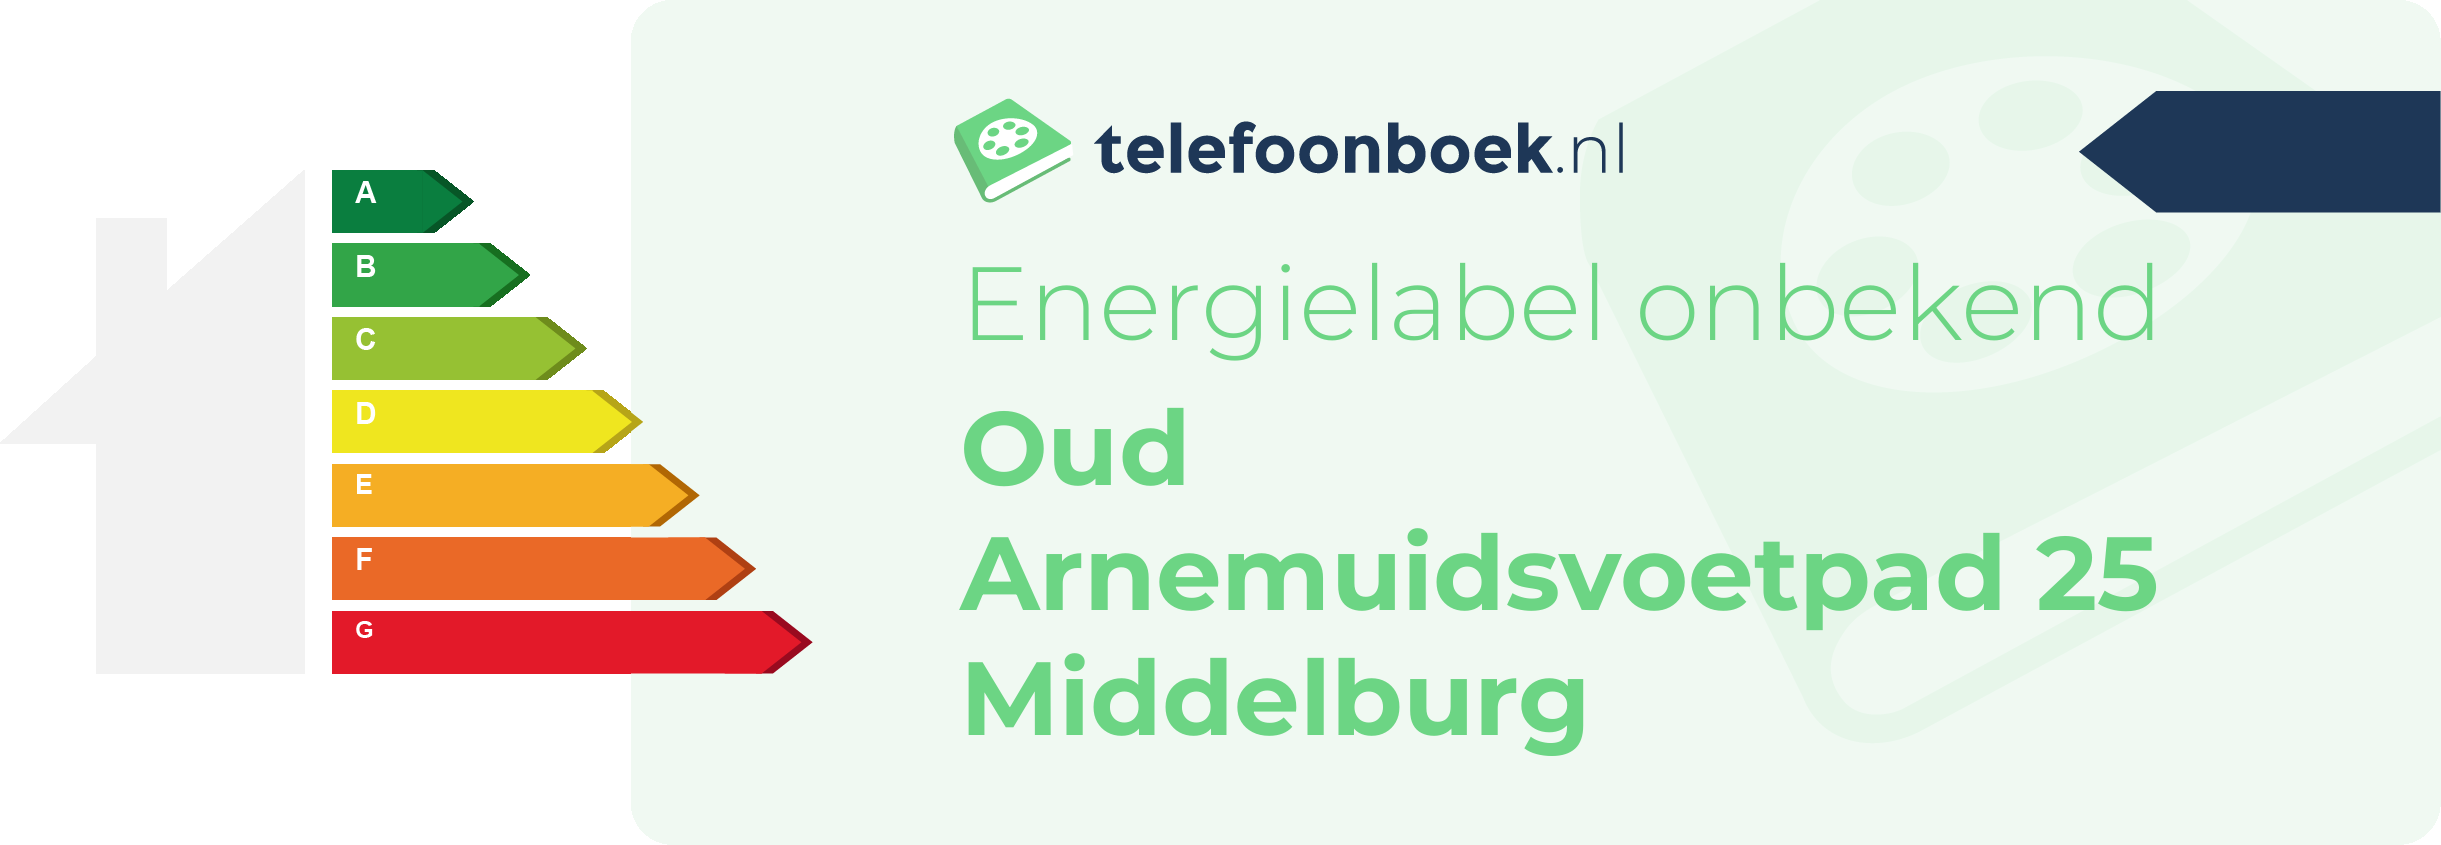 Energielabel Oud Arnemuidsvoetpad 25 Middelburg